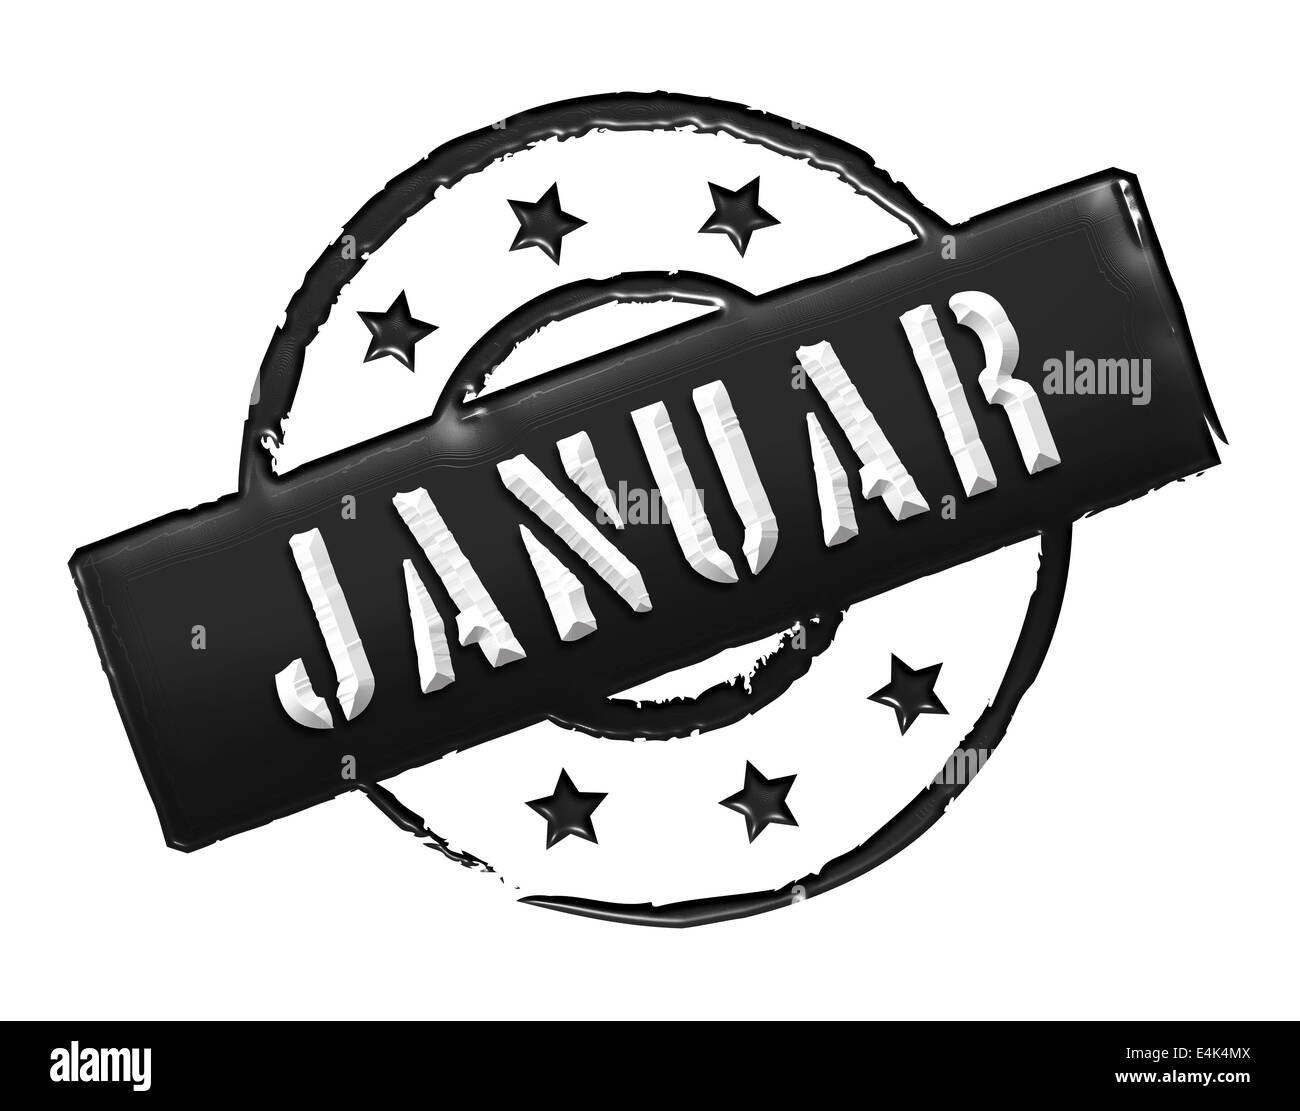 Stamp - JANUAR Stock Photo